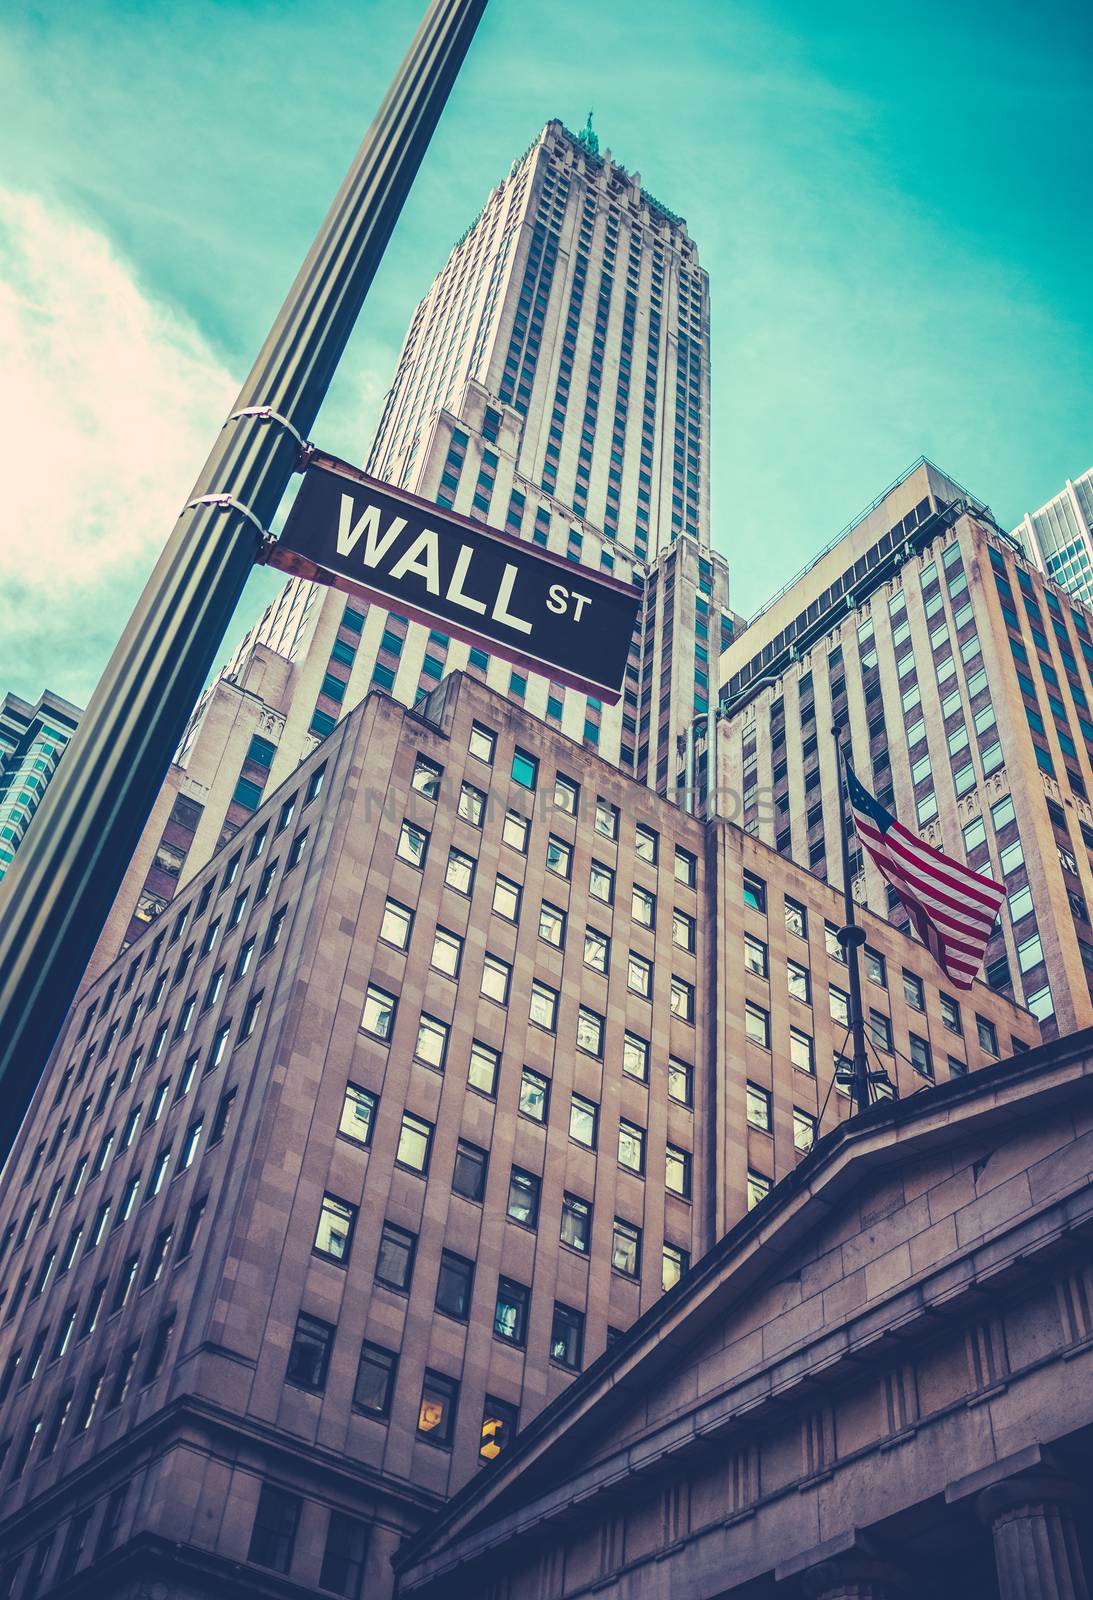 Wall Street Sign In Manhattan NYC by mrdoomits